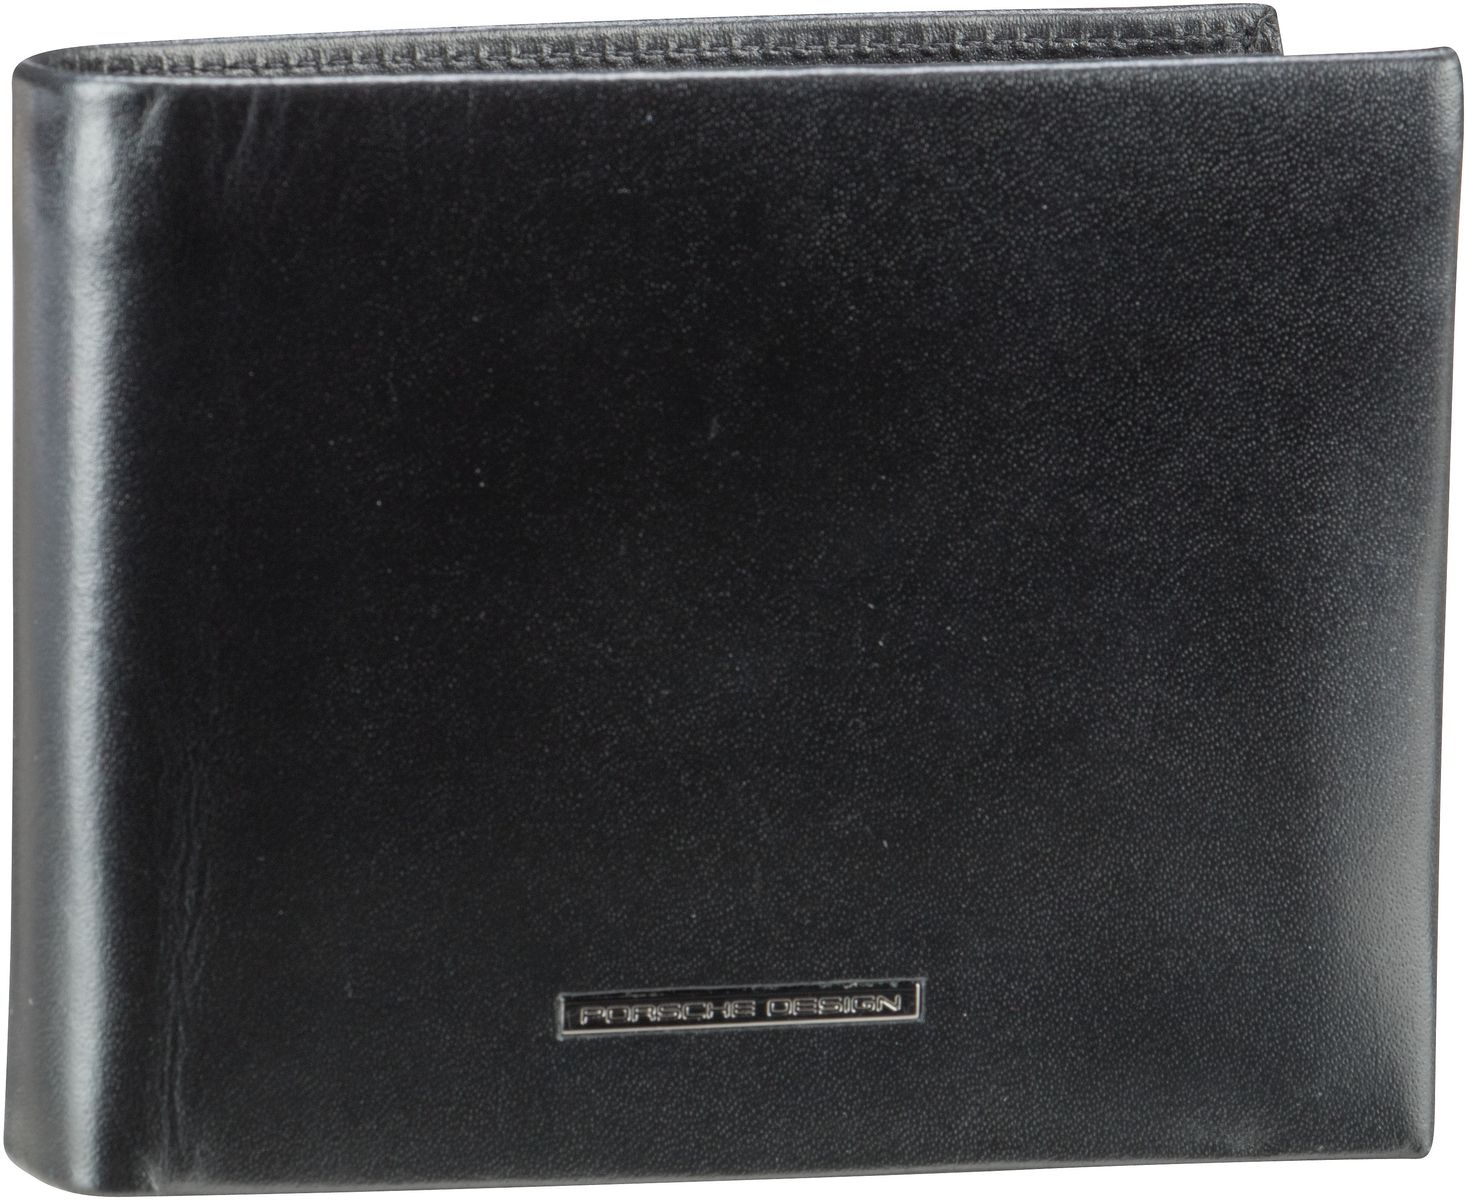 Porsche Design Classic Wallet 9906 - Black